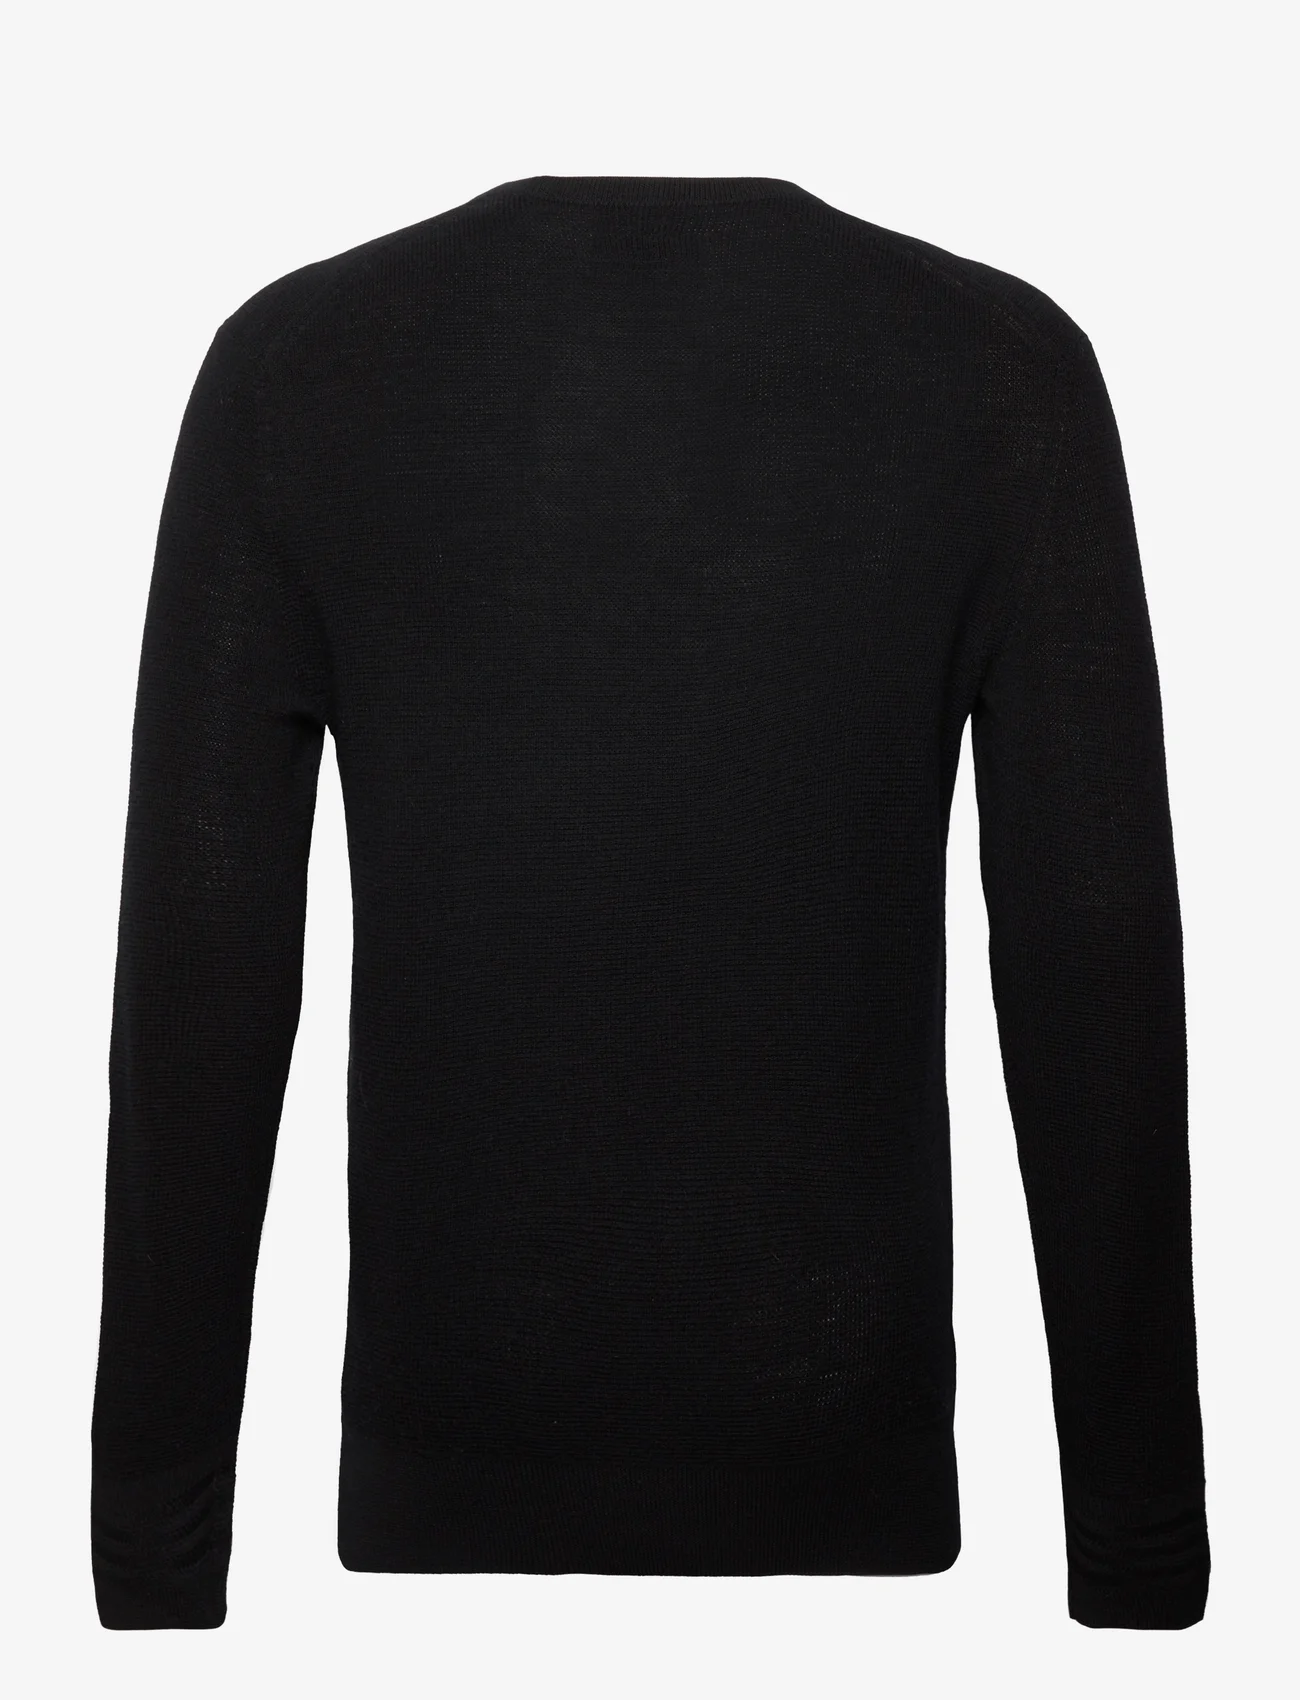 AllSaints - ivar merino crew - basic knitwear - black - 1